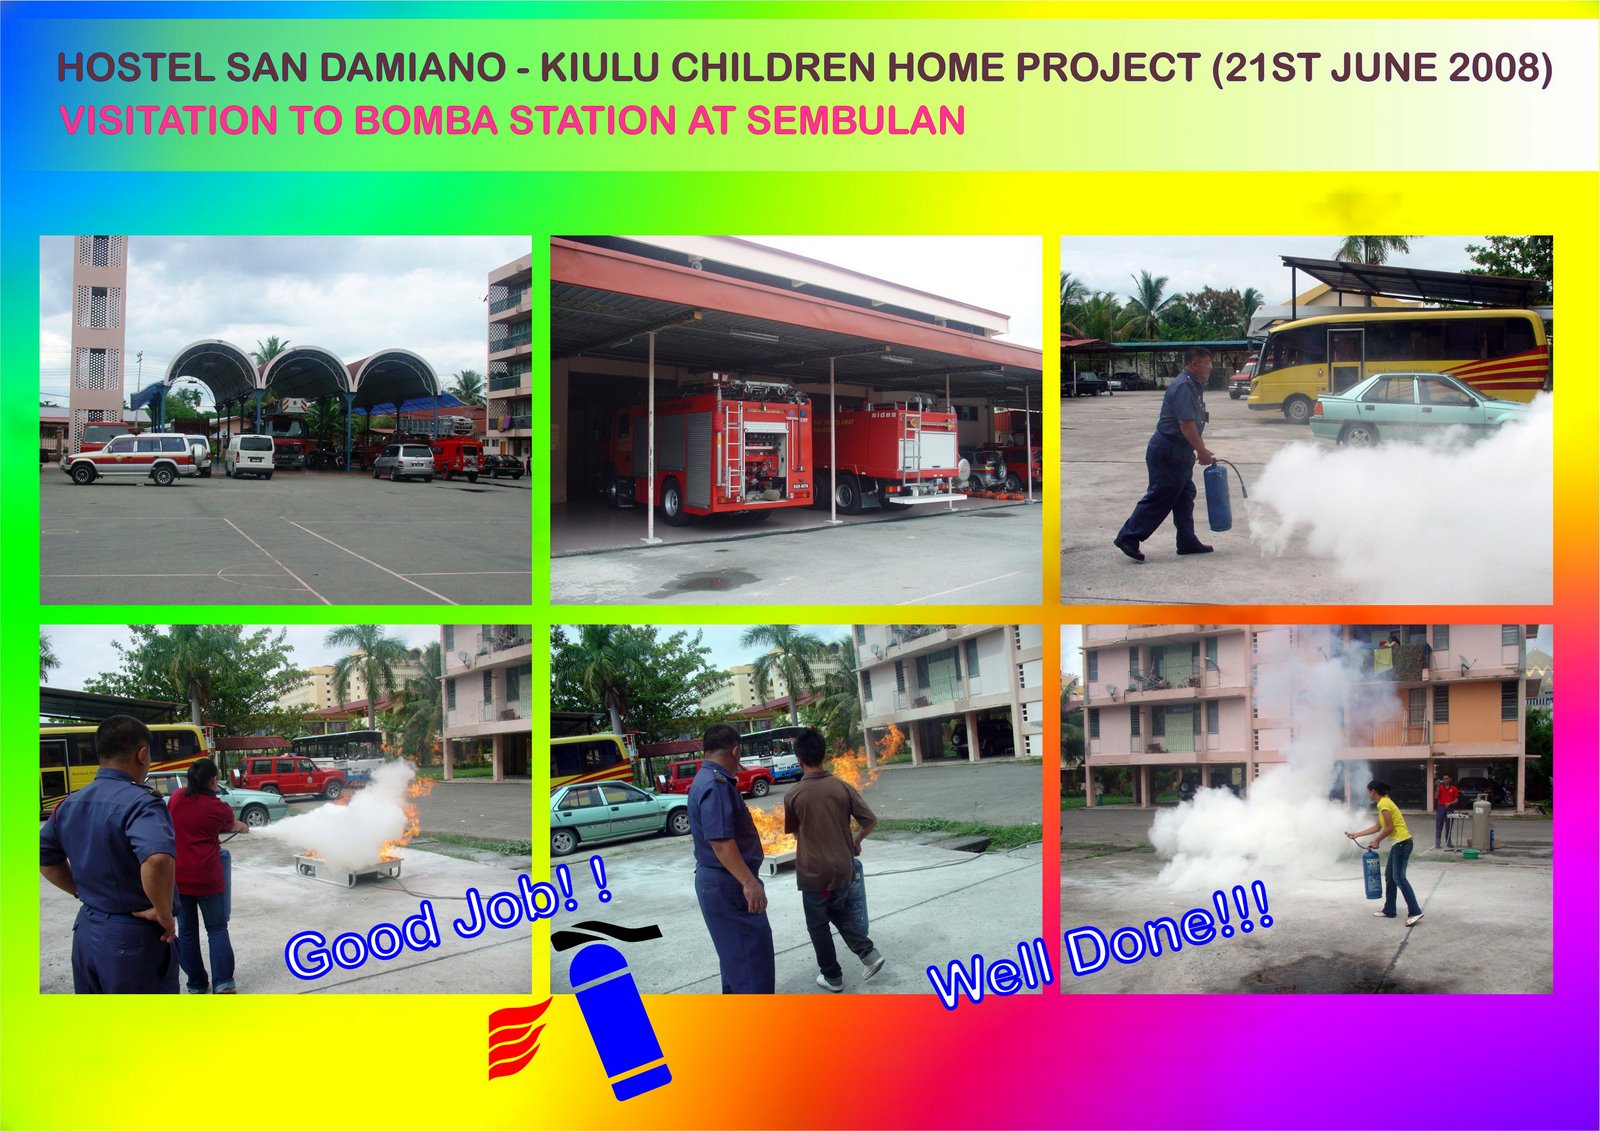 Hostel San Damiano - Kiulu Children Home Project (21st June 2008)